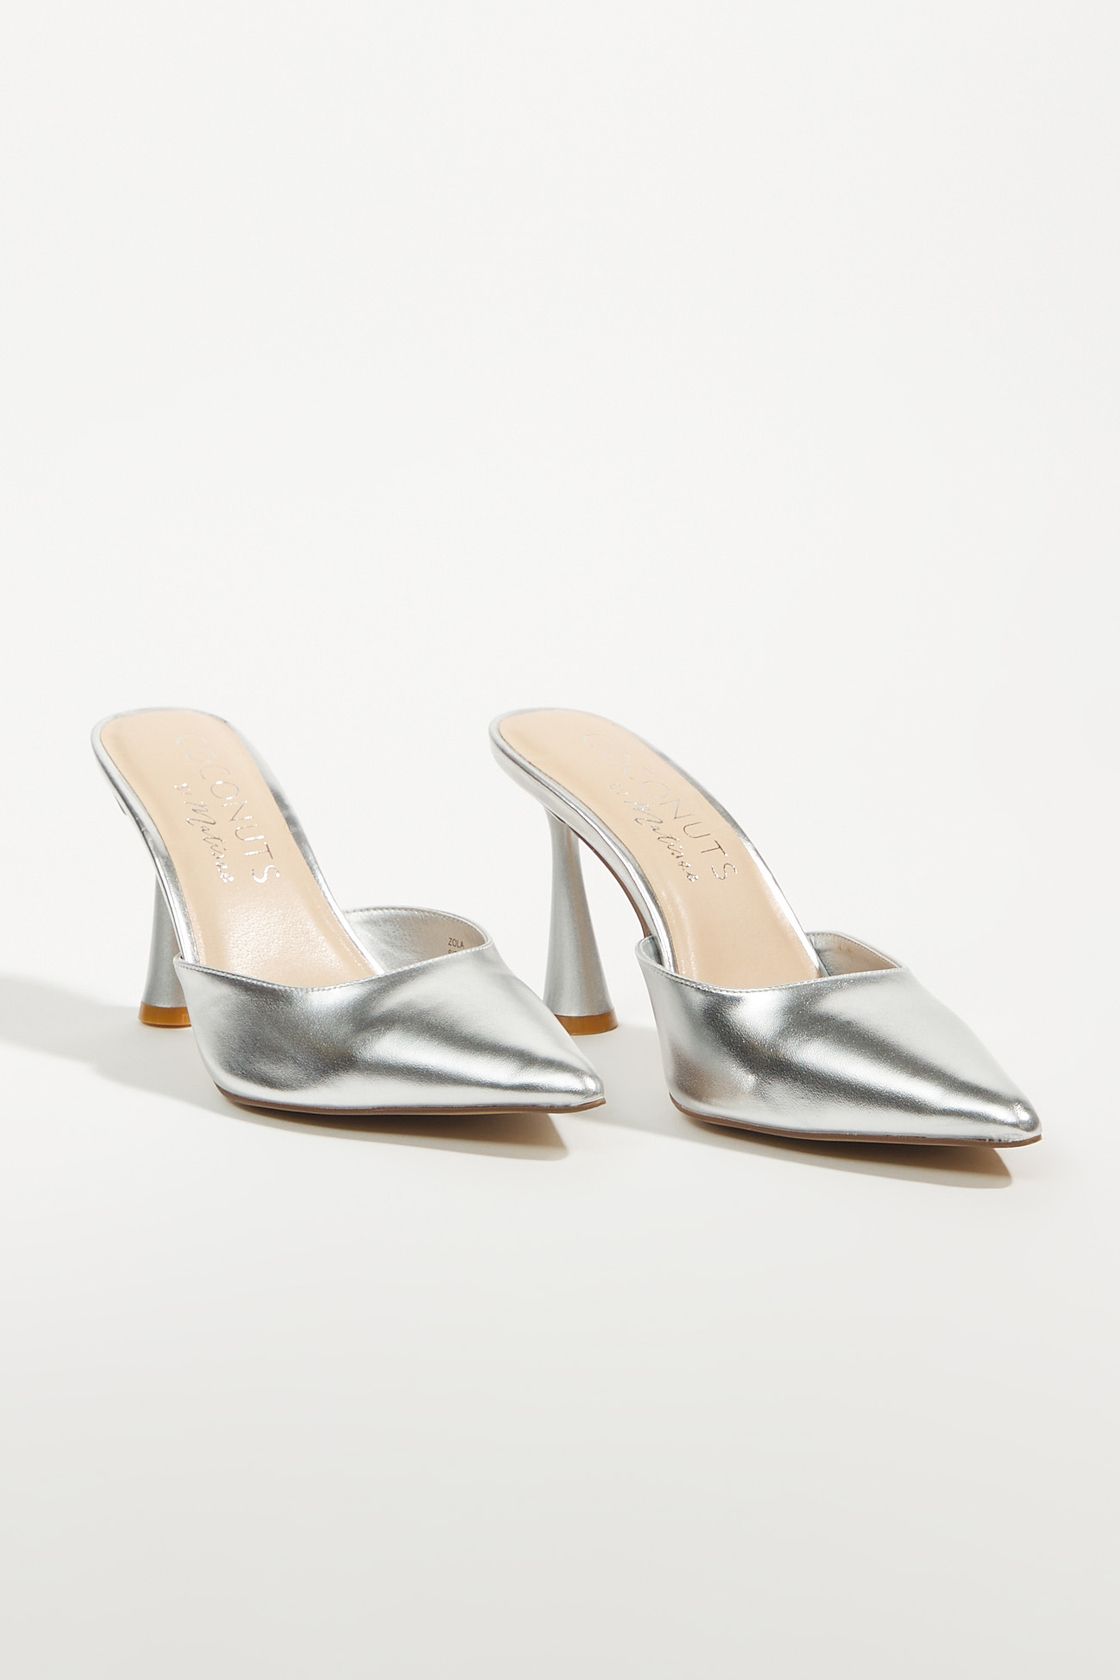 Zola Metallic Heel by Matisse | Altar'd State